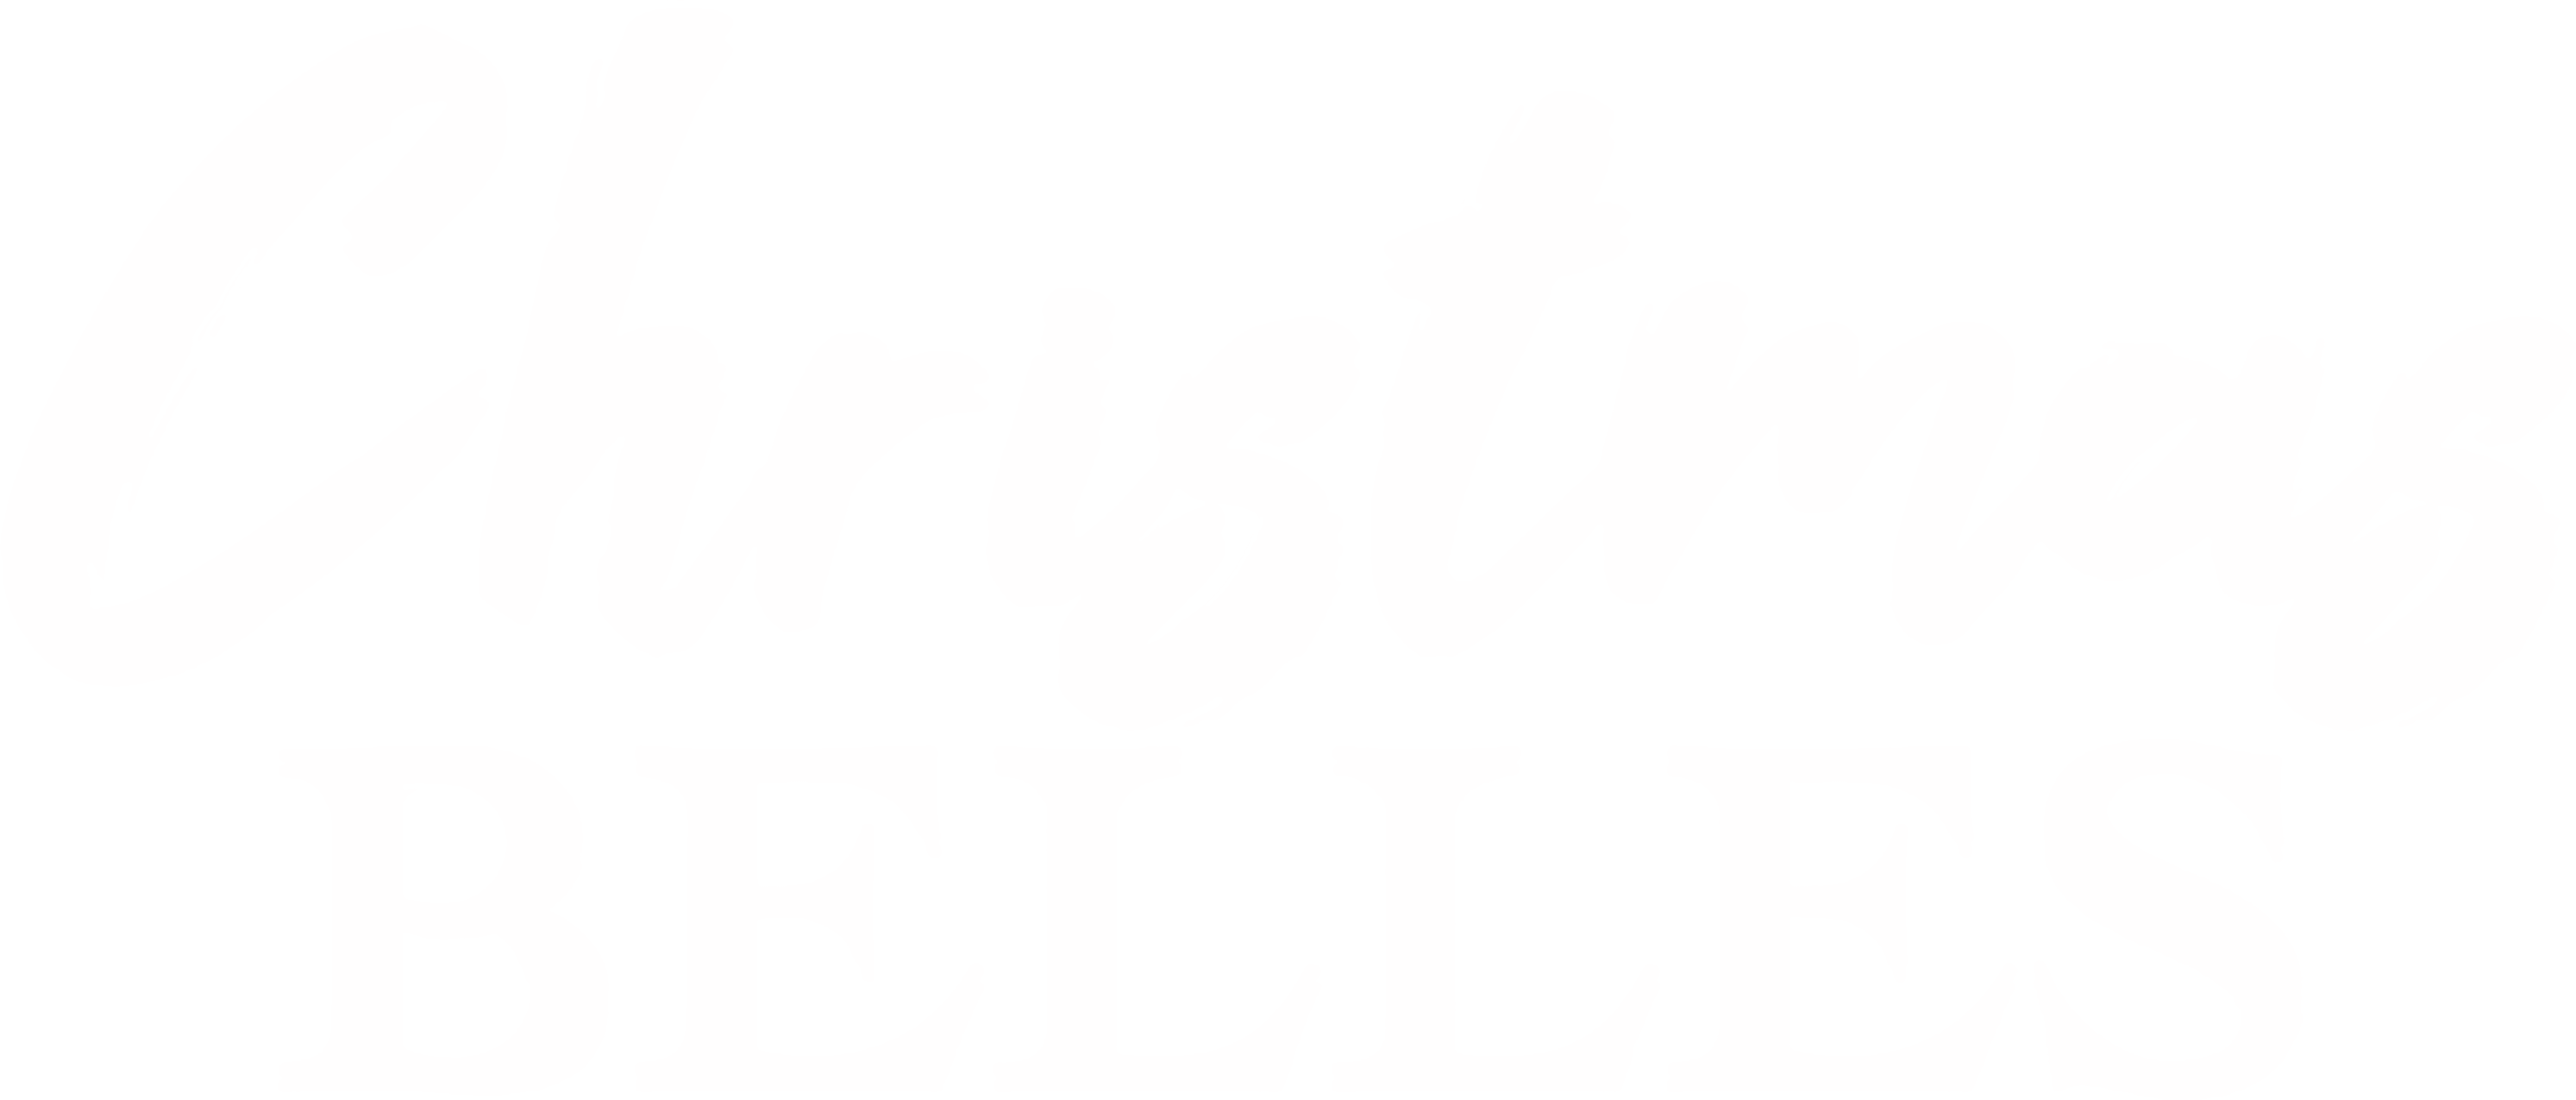 Christmas Belles logo